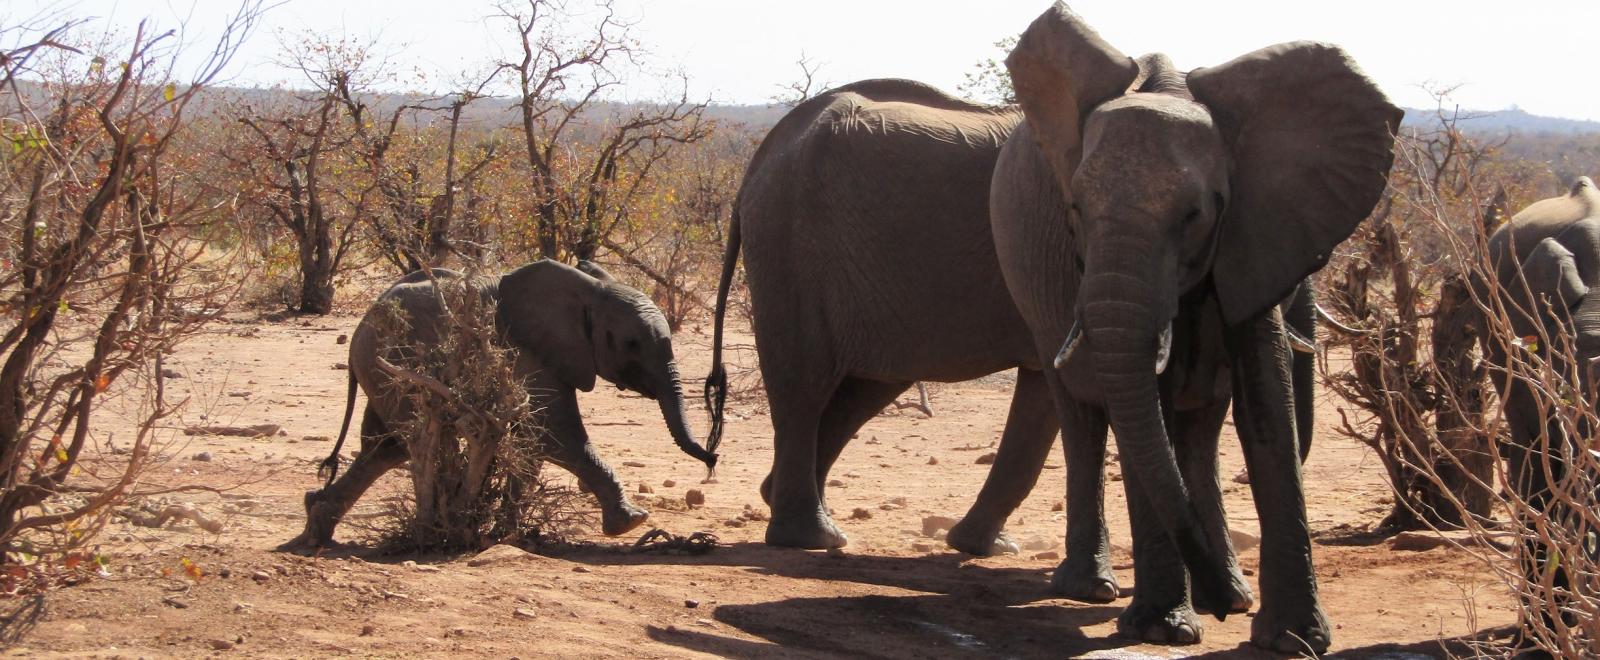 Participants on an animal volunteer program in Botswana capture a baby rhino on camera. 